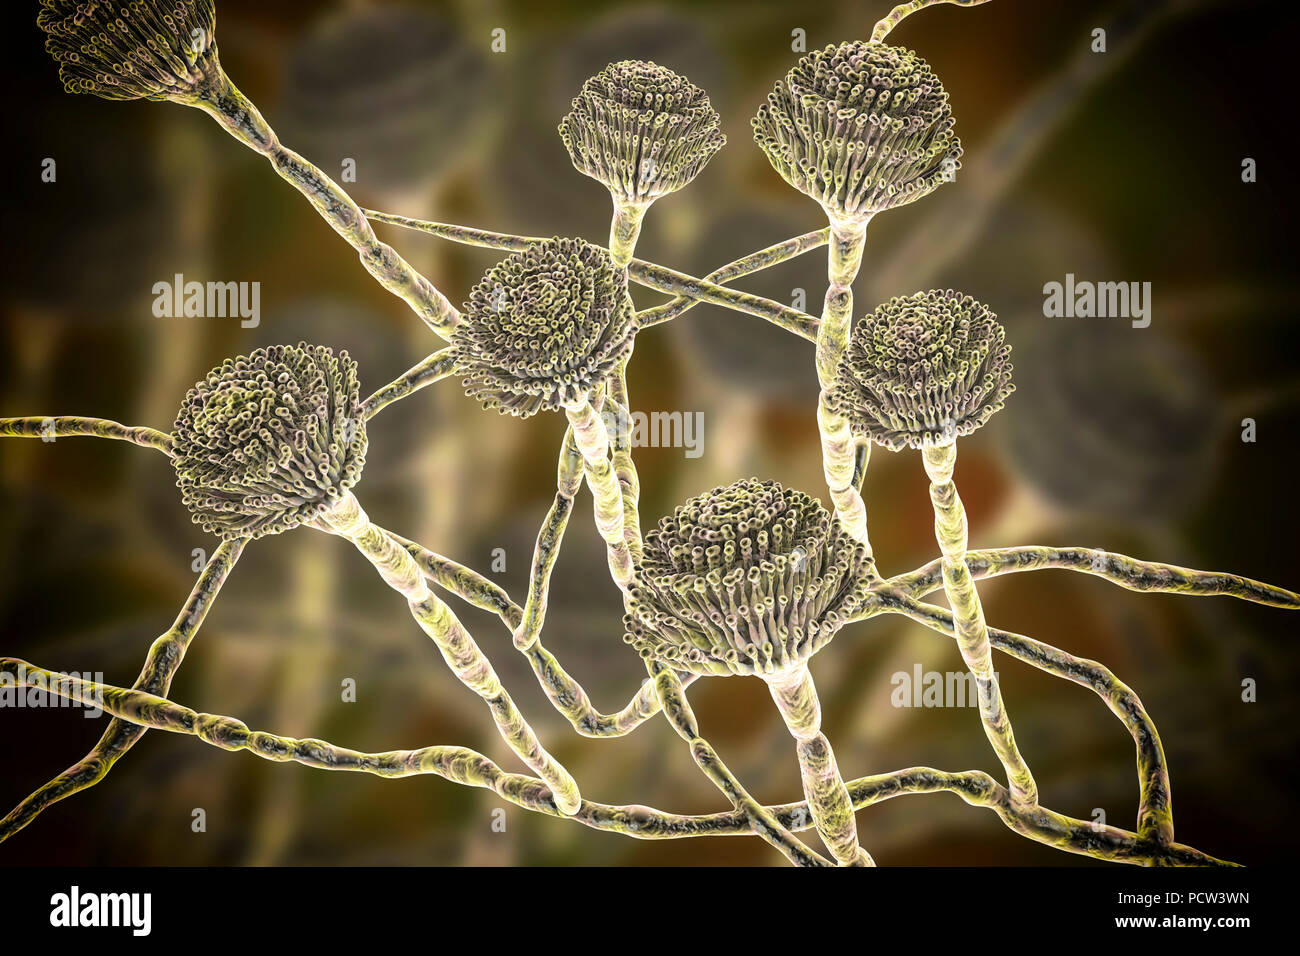 Aspergillus fumigatus immagini e fotografie stock ad alta risoluzione -  Alamy